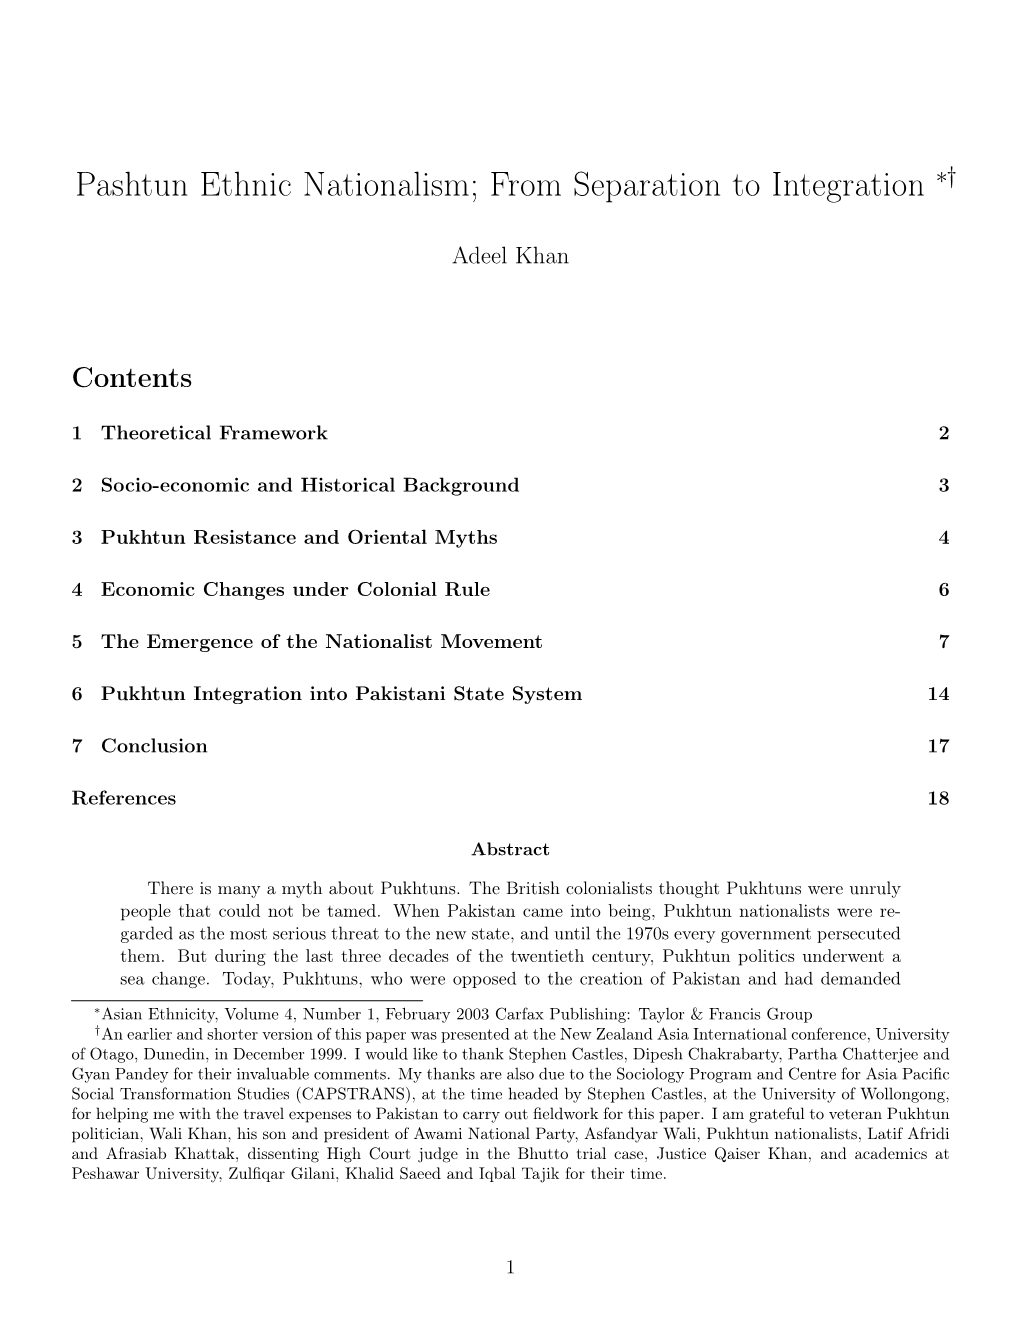 Pashtun Ethnic Nationalism Separation to Integration